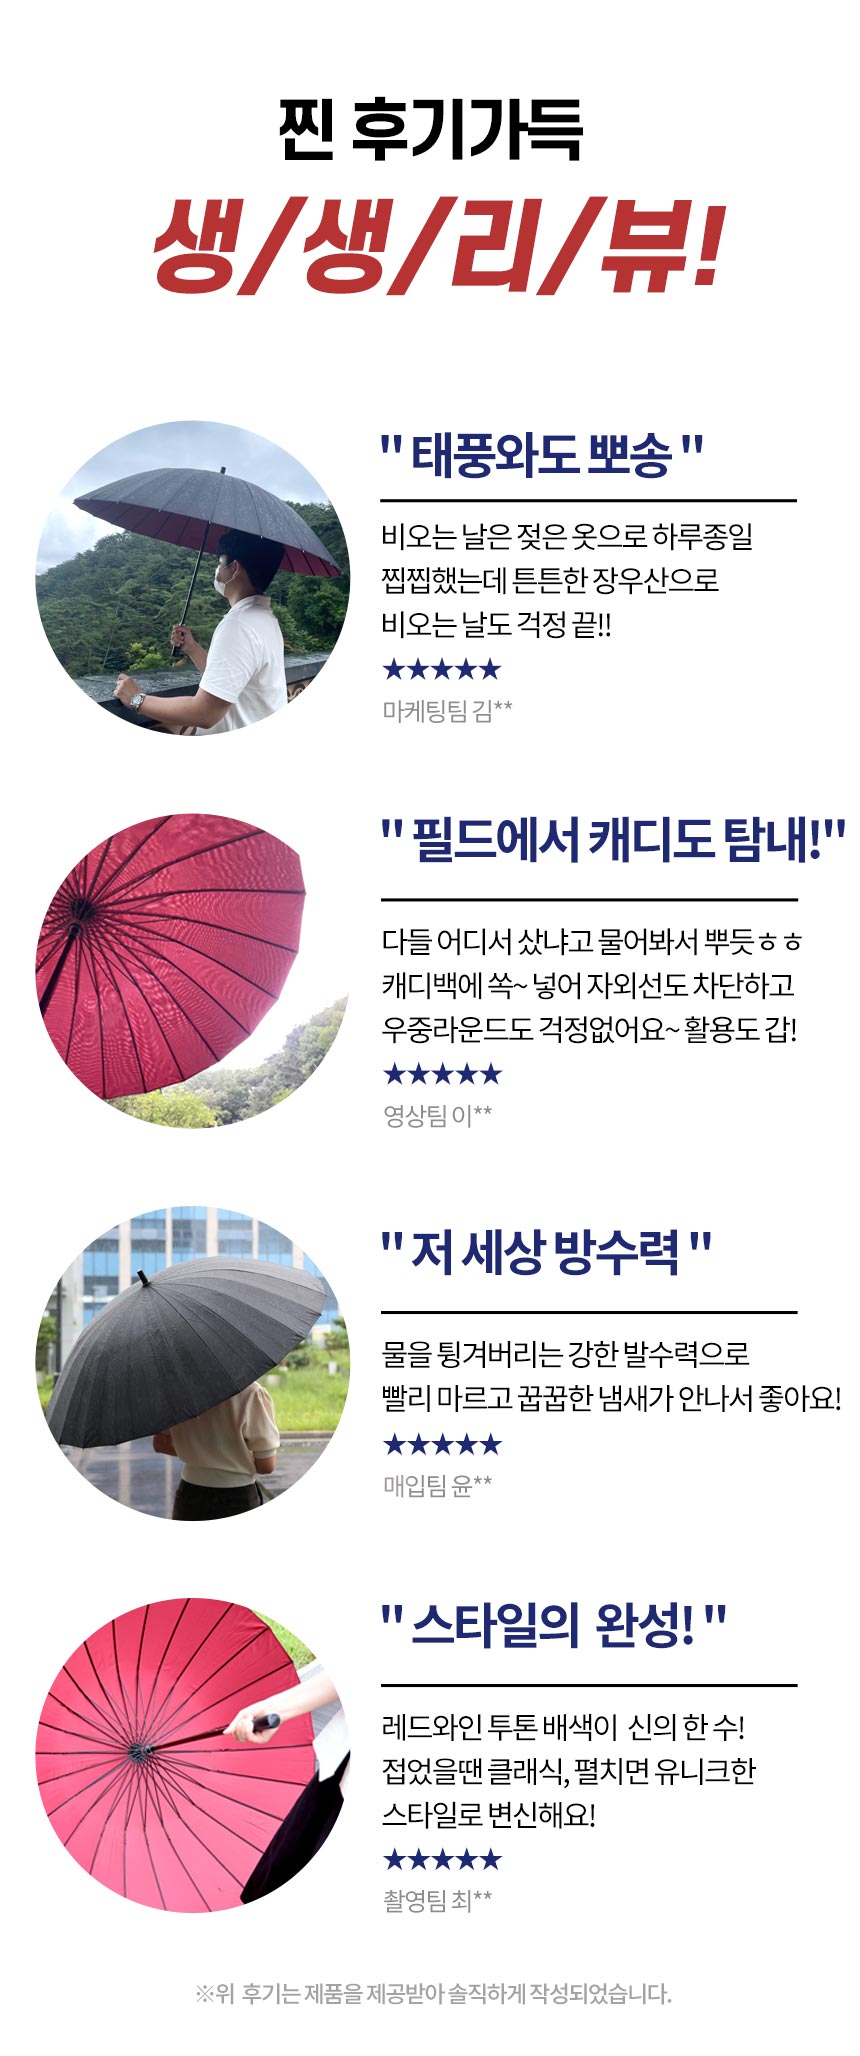 large-umbrella_22_09.jpg